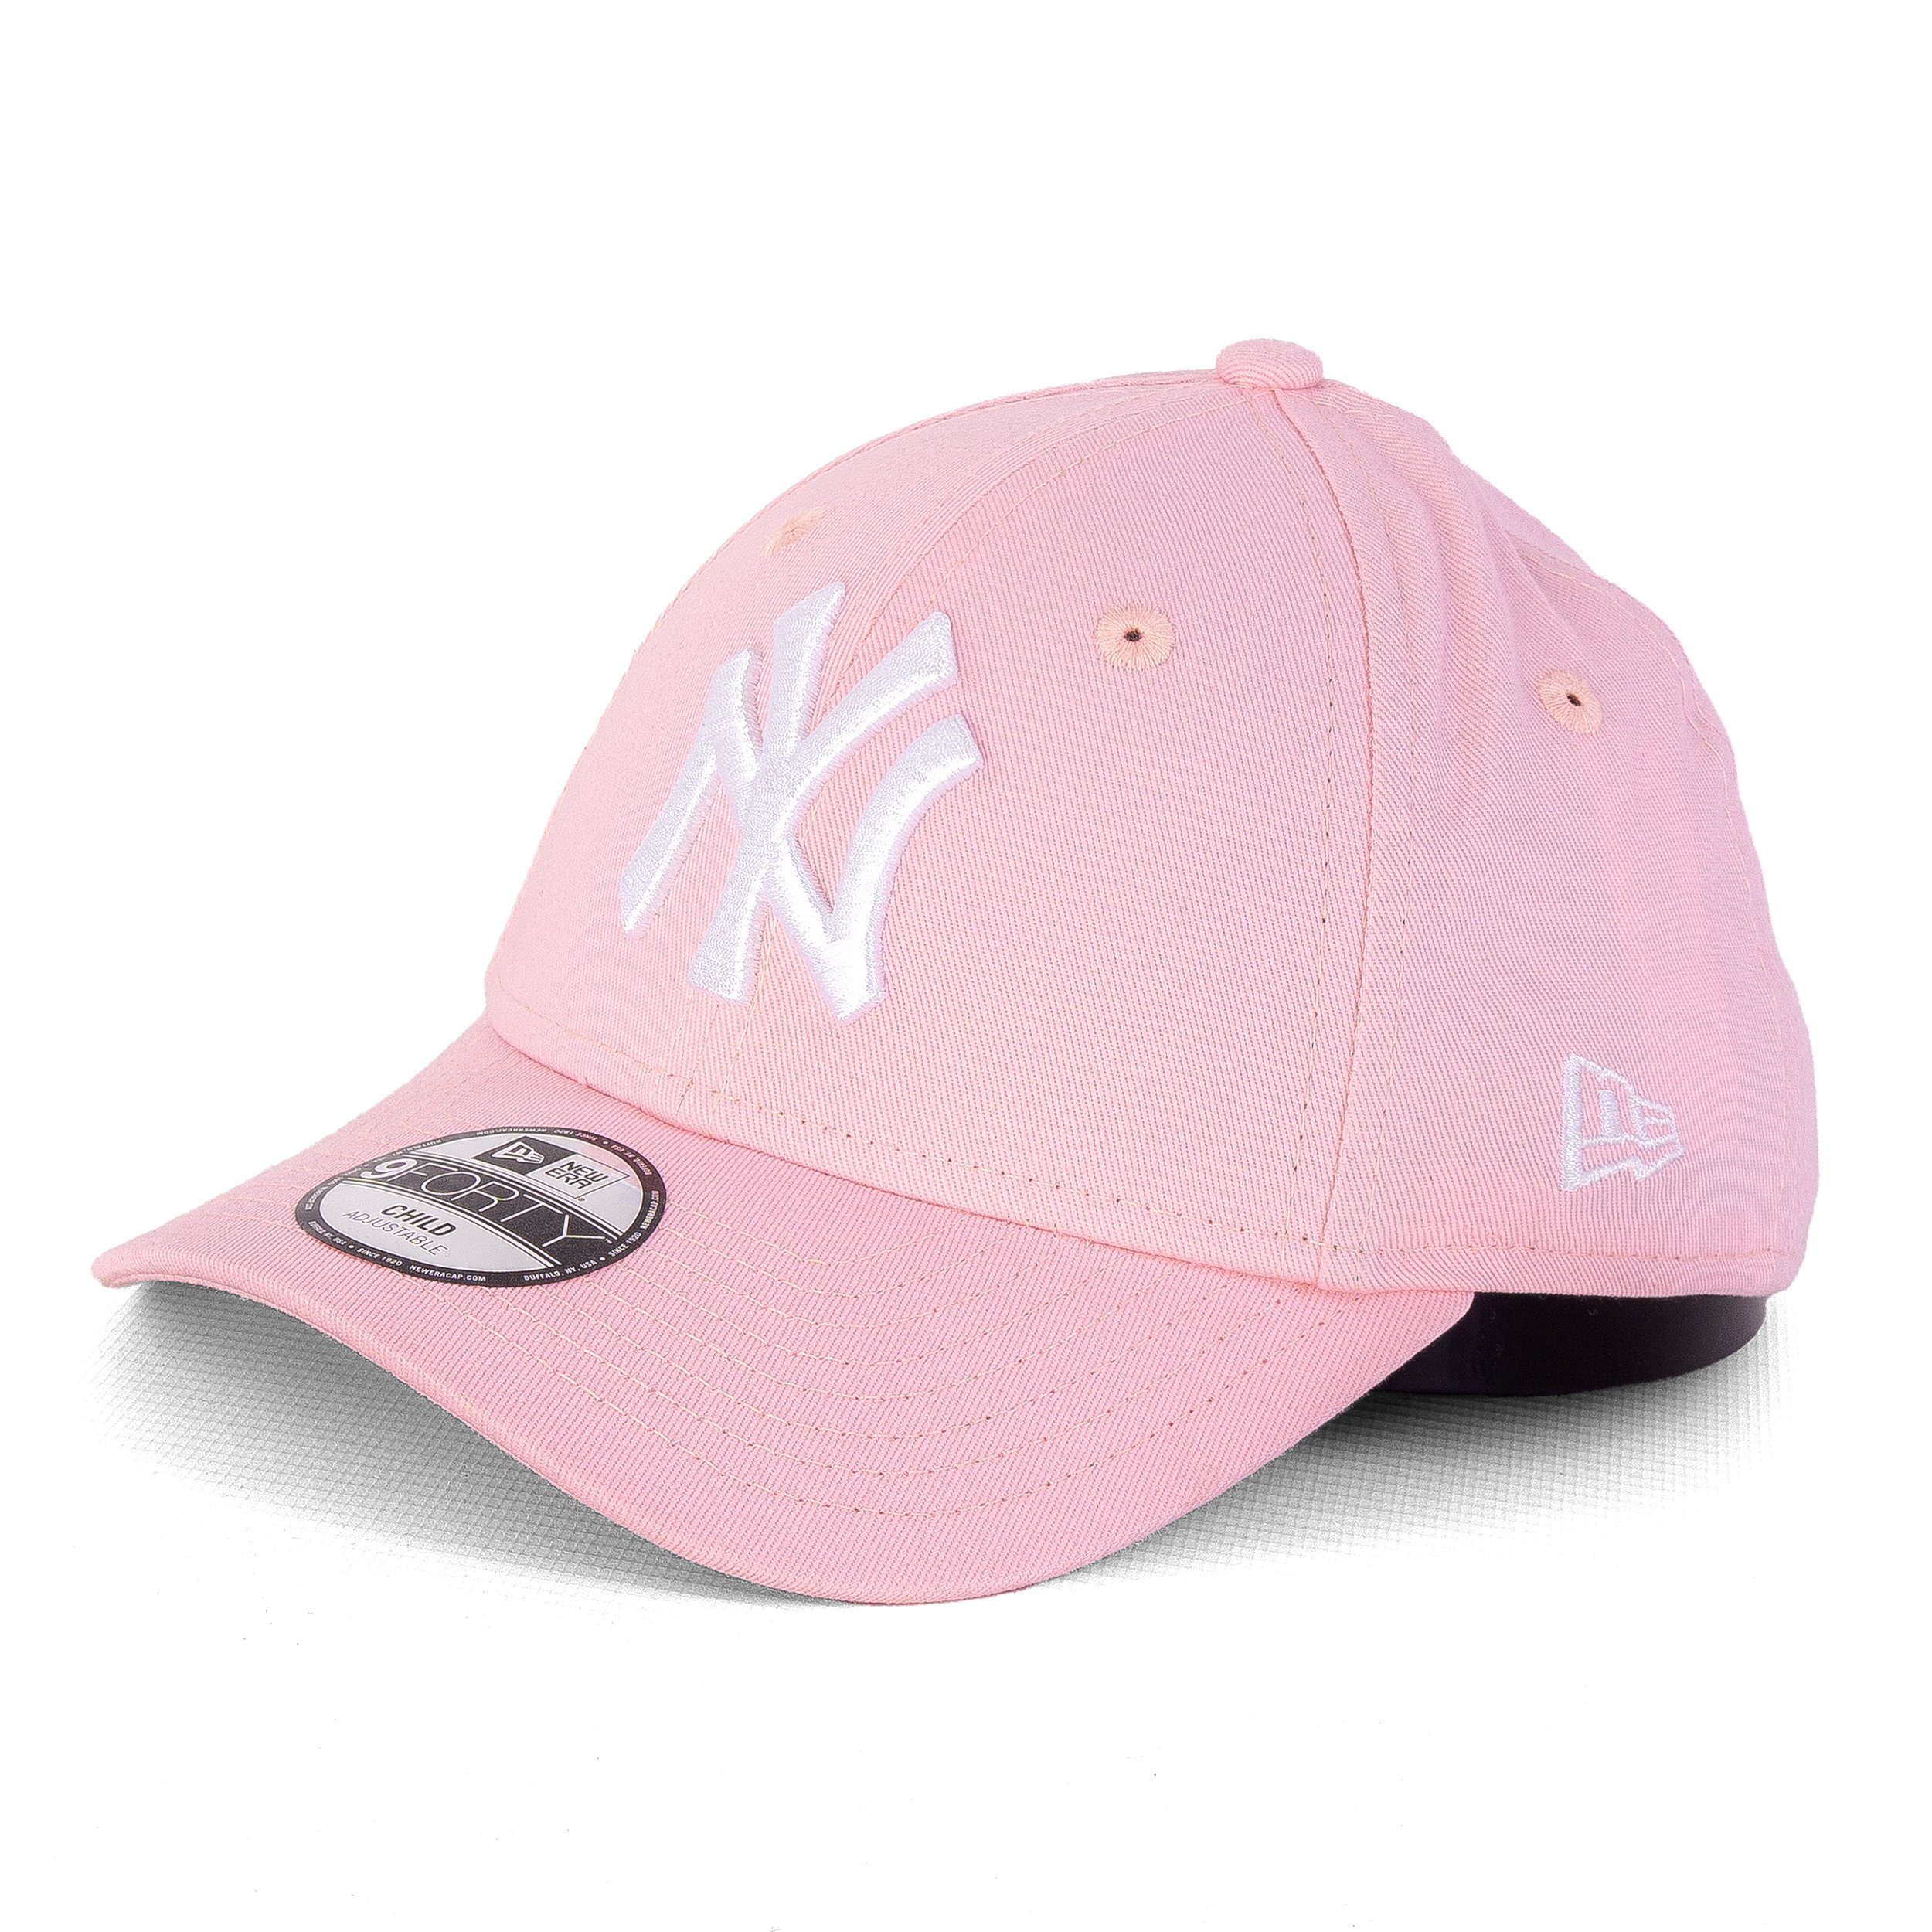 York (1-St) Cap Cap Yakees New New Era New Era pink Baseball